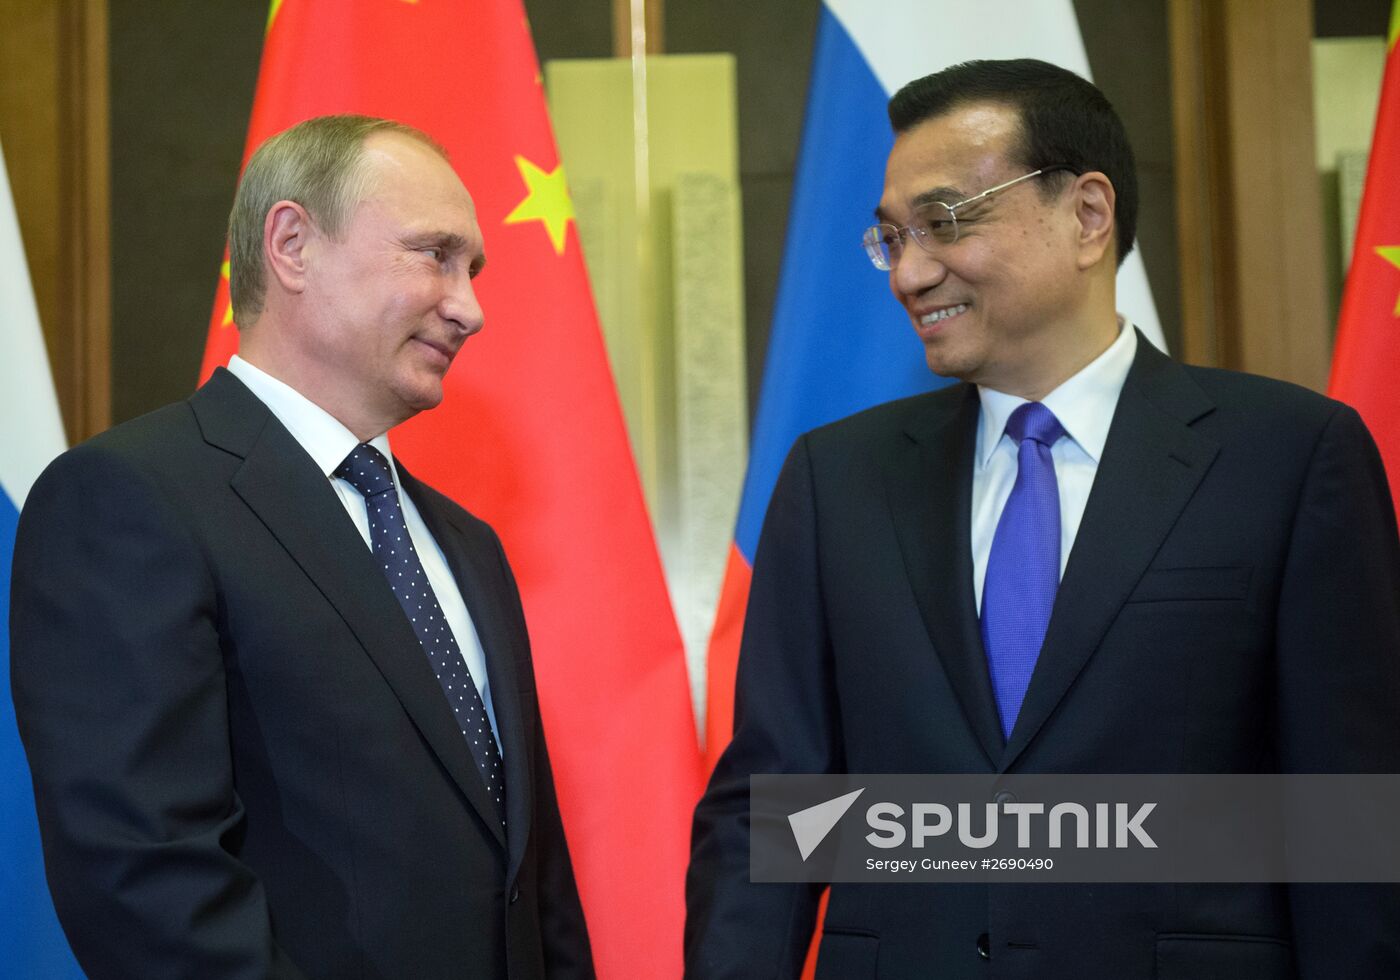 Russian President Vladimir Putin's visit to People's Republic of China